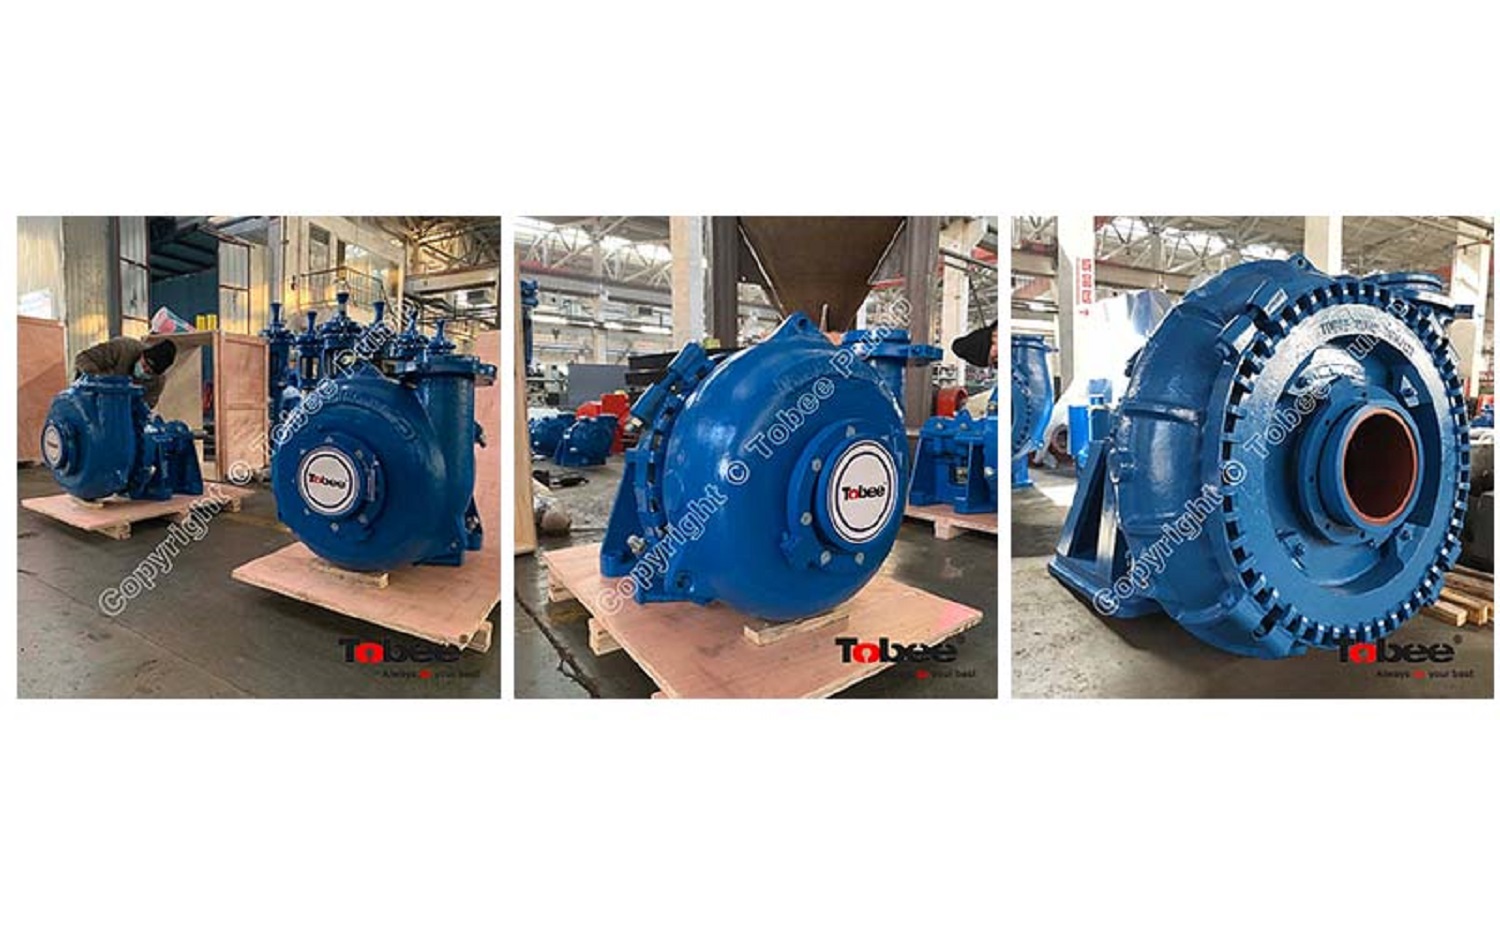 TG18x16TU Sand Dredging Pumpa brasion gravel centrifugal pumphigh pressure dredge pump